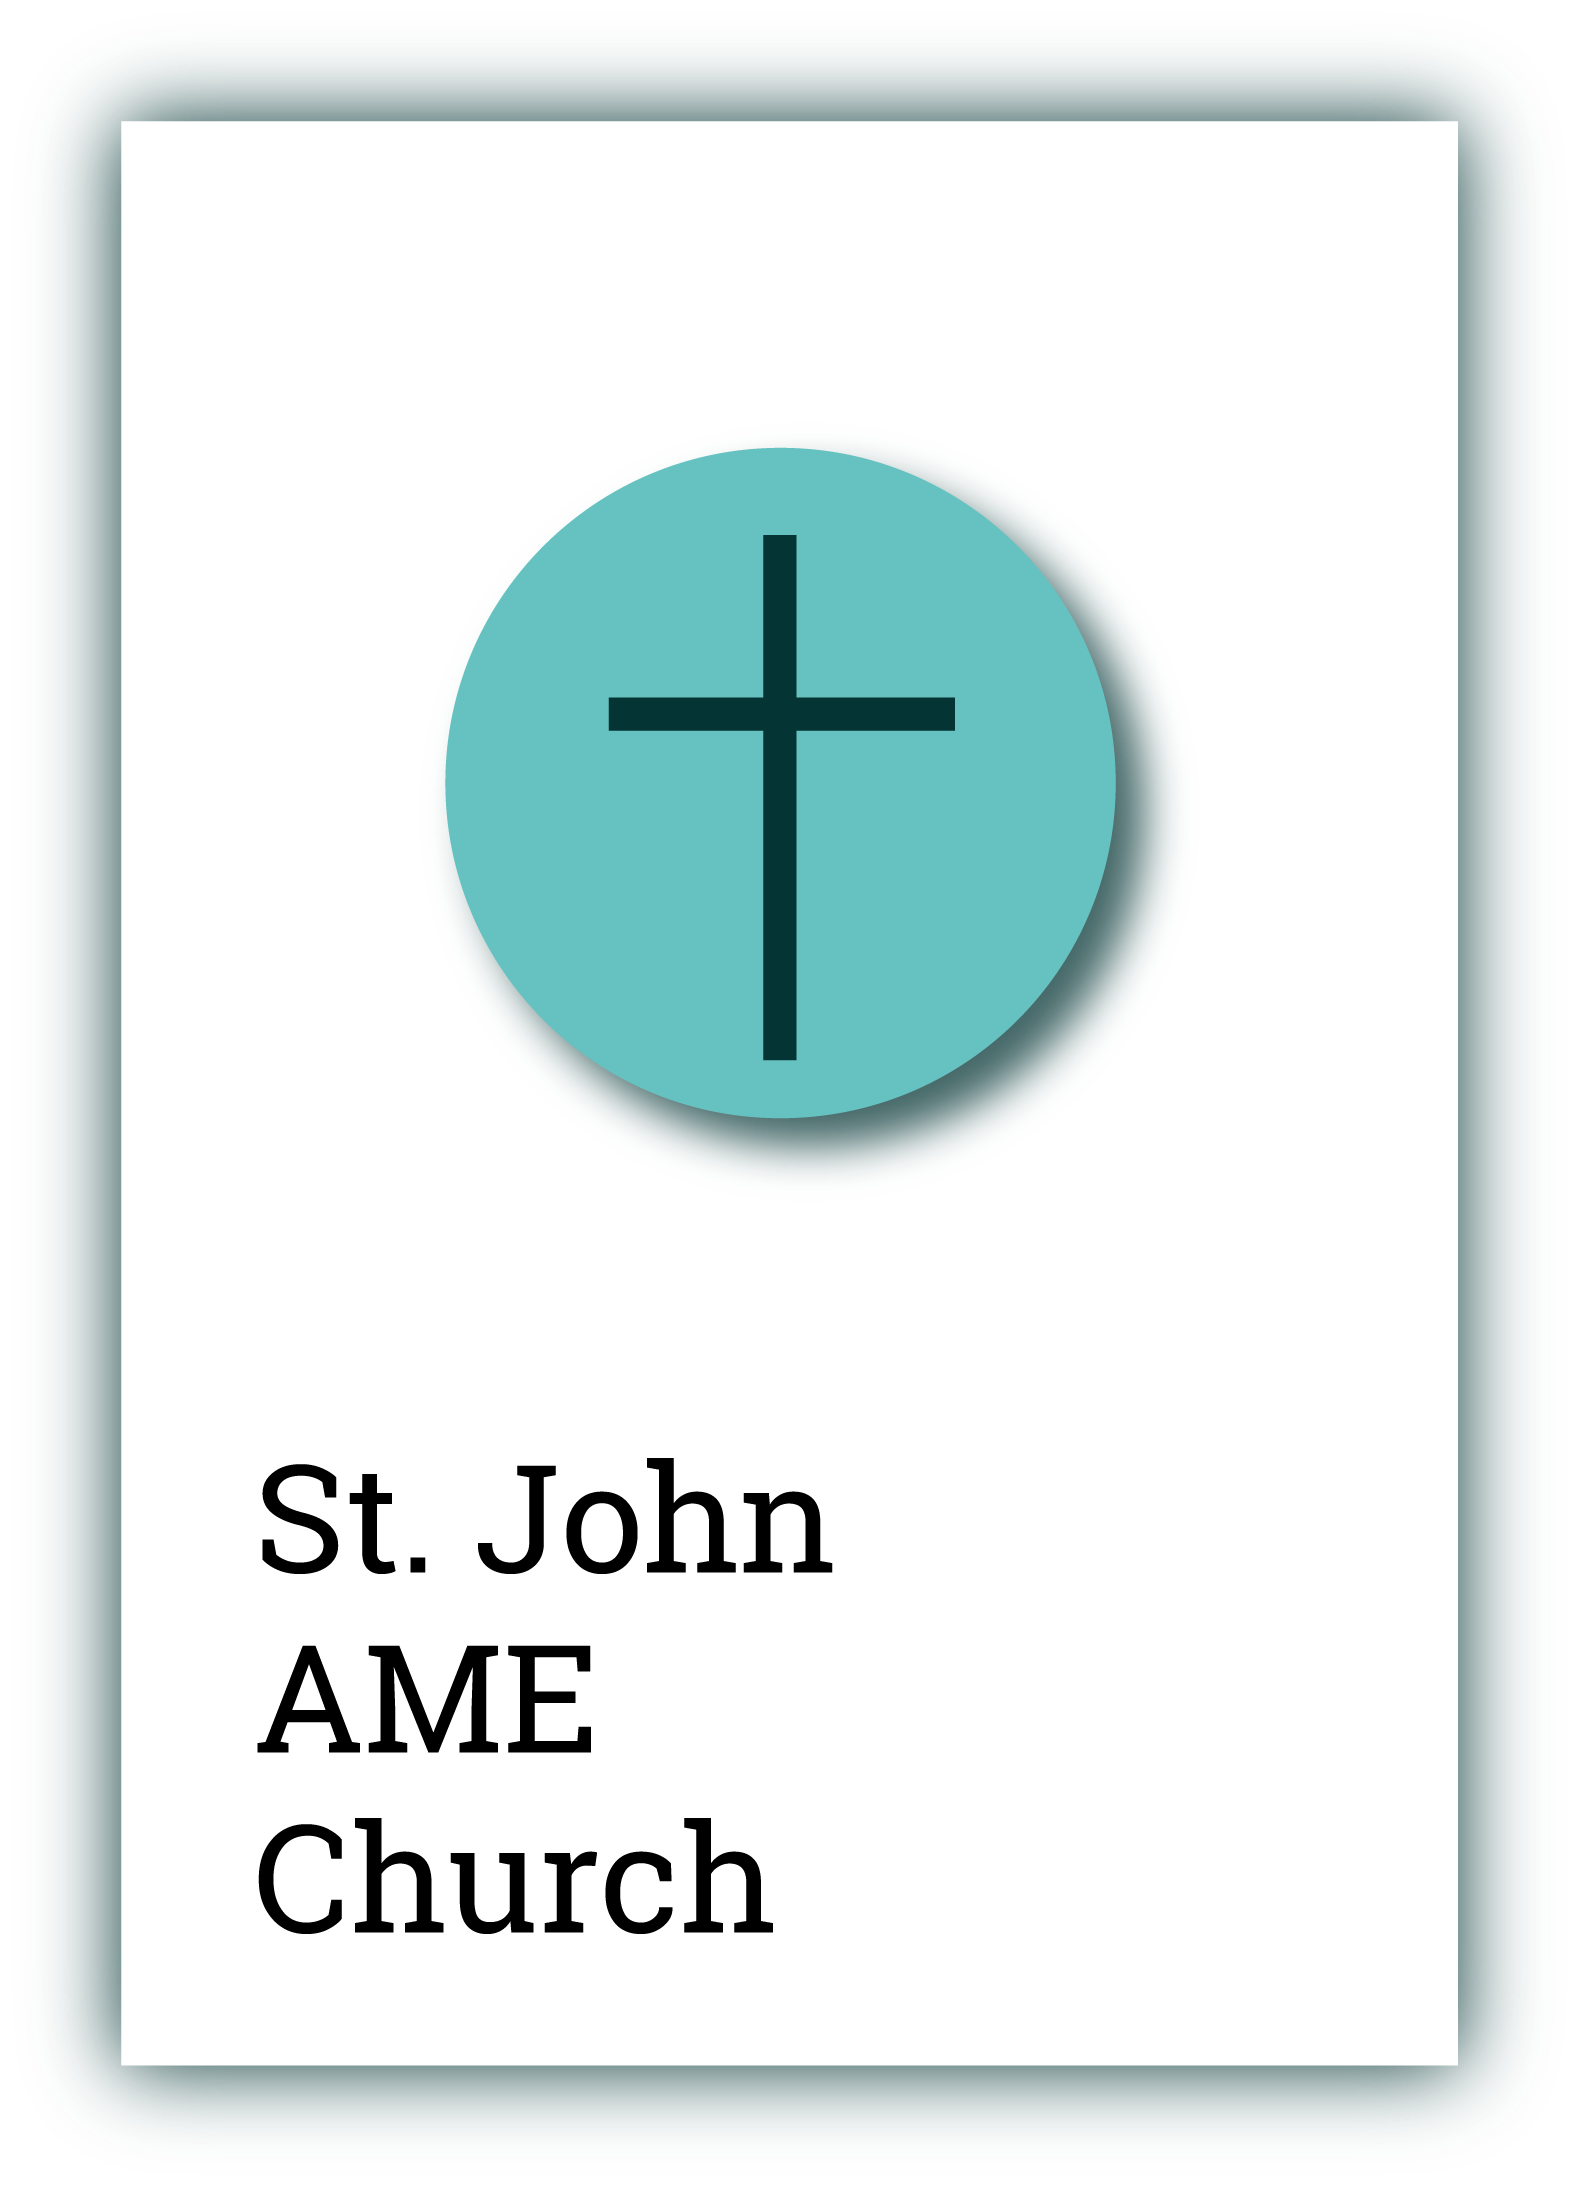 St. John AME Church